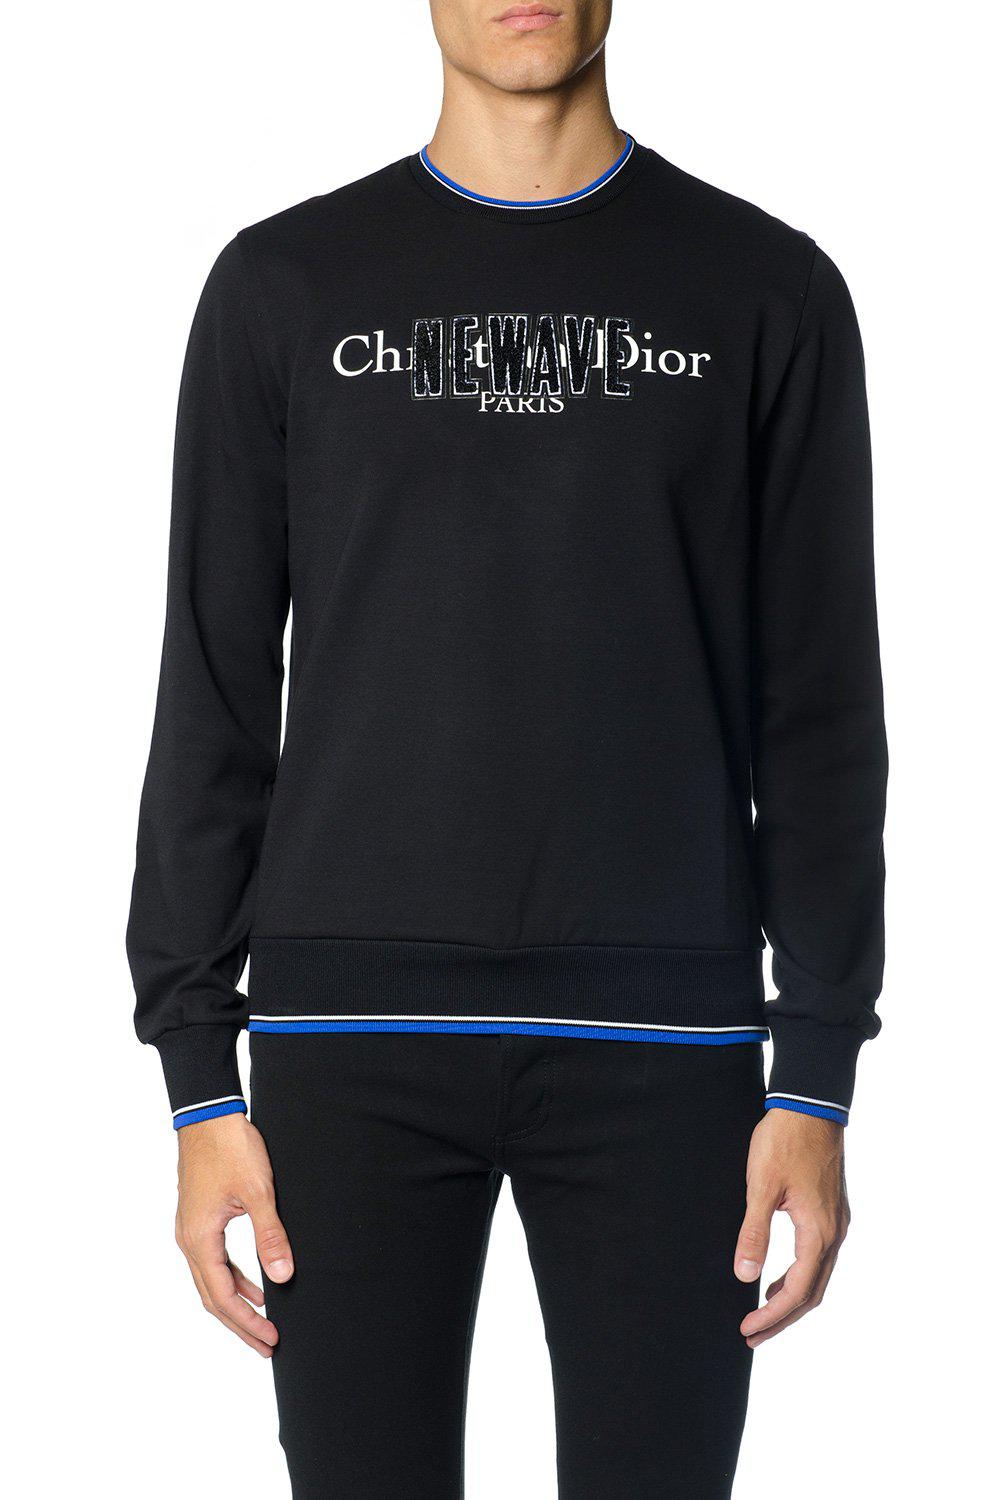 Dior Homme Newave Sweatshirt in Black for Men | Lyst